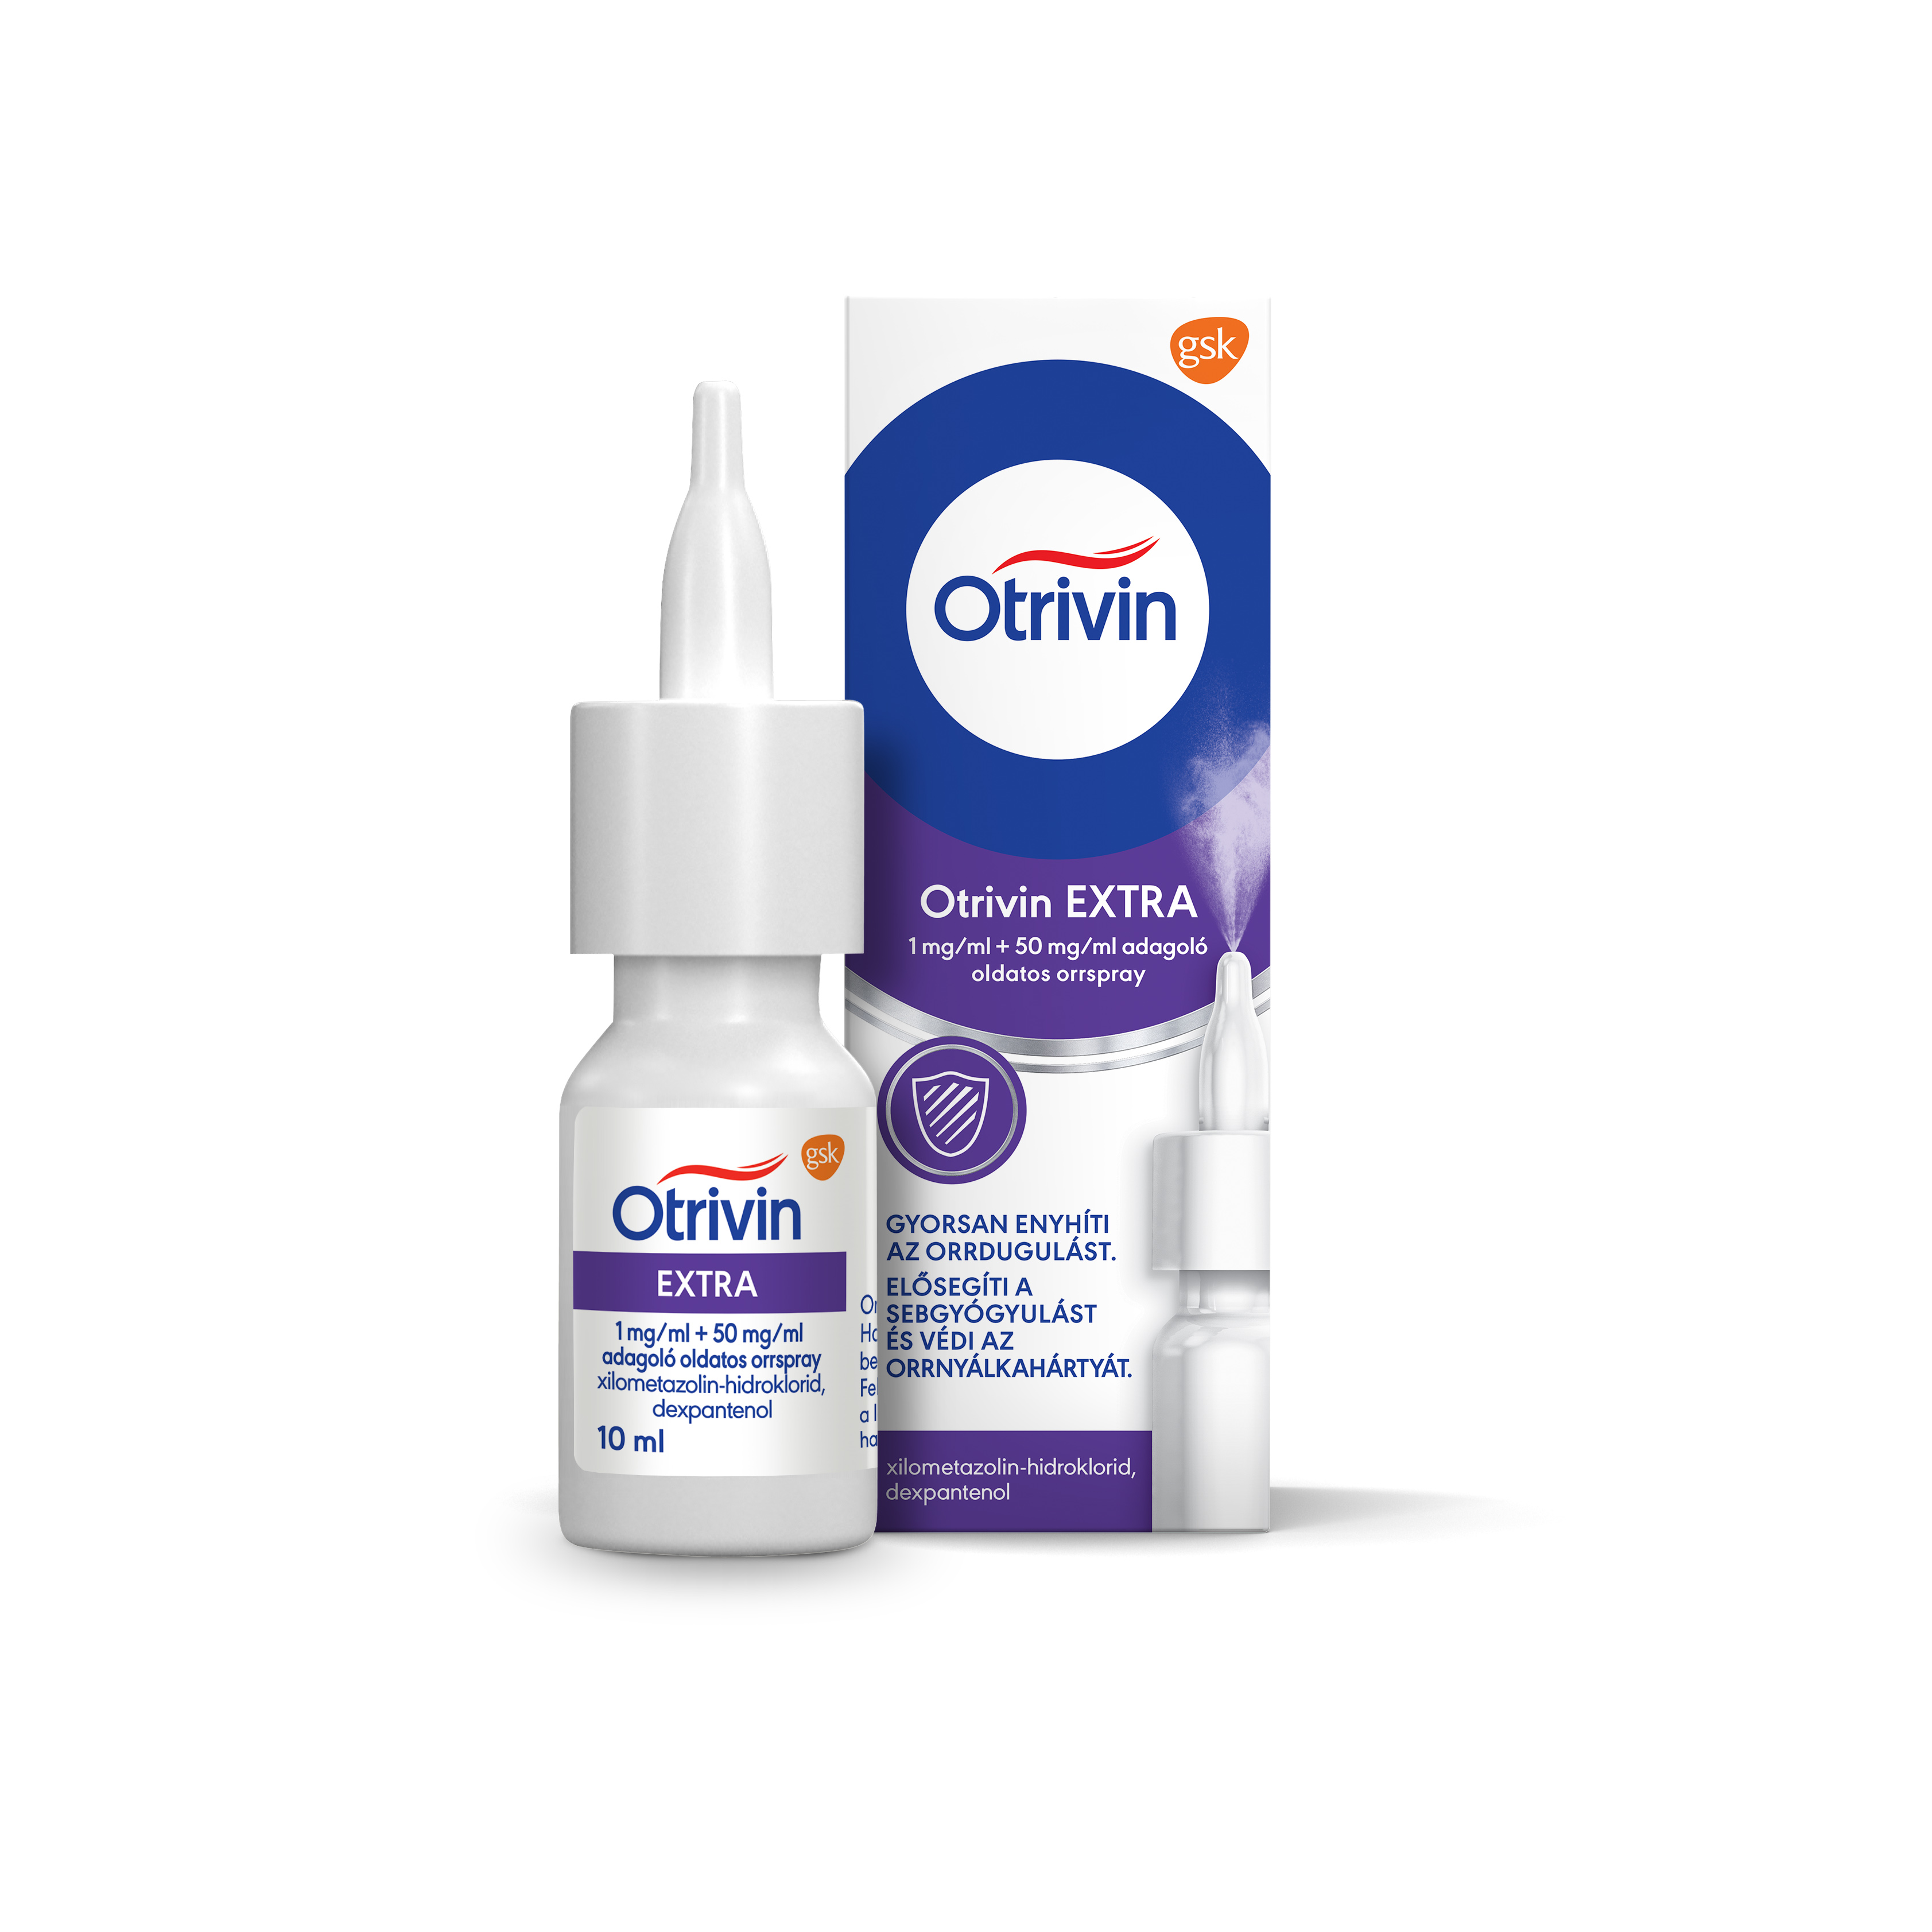 Otrivin Extra 1mg/ml+50mg/ml oldatos orrspray 